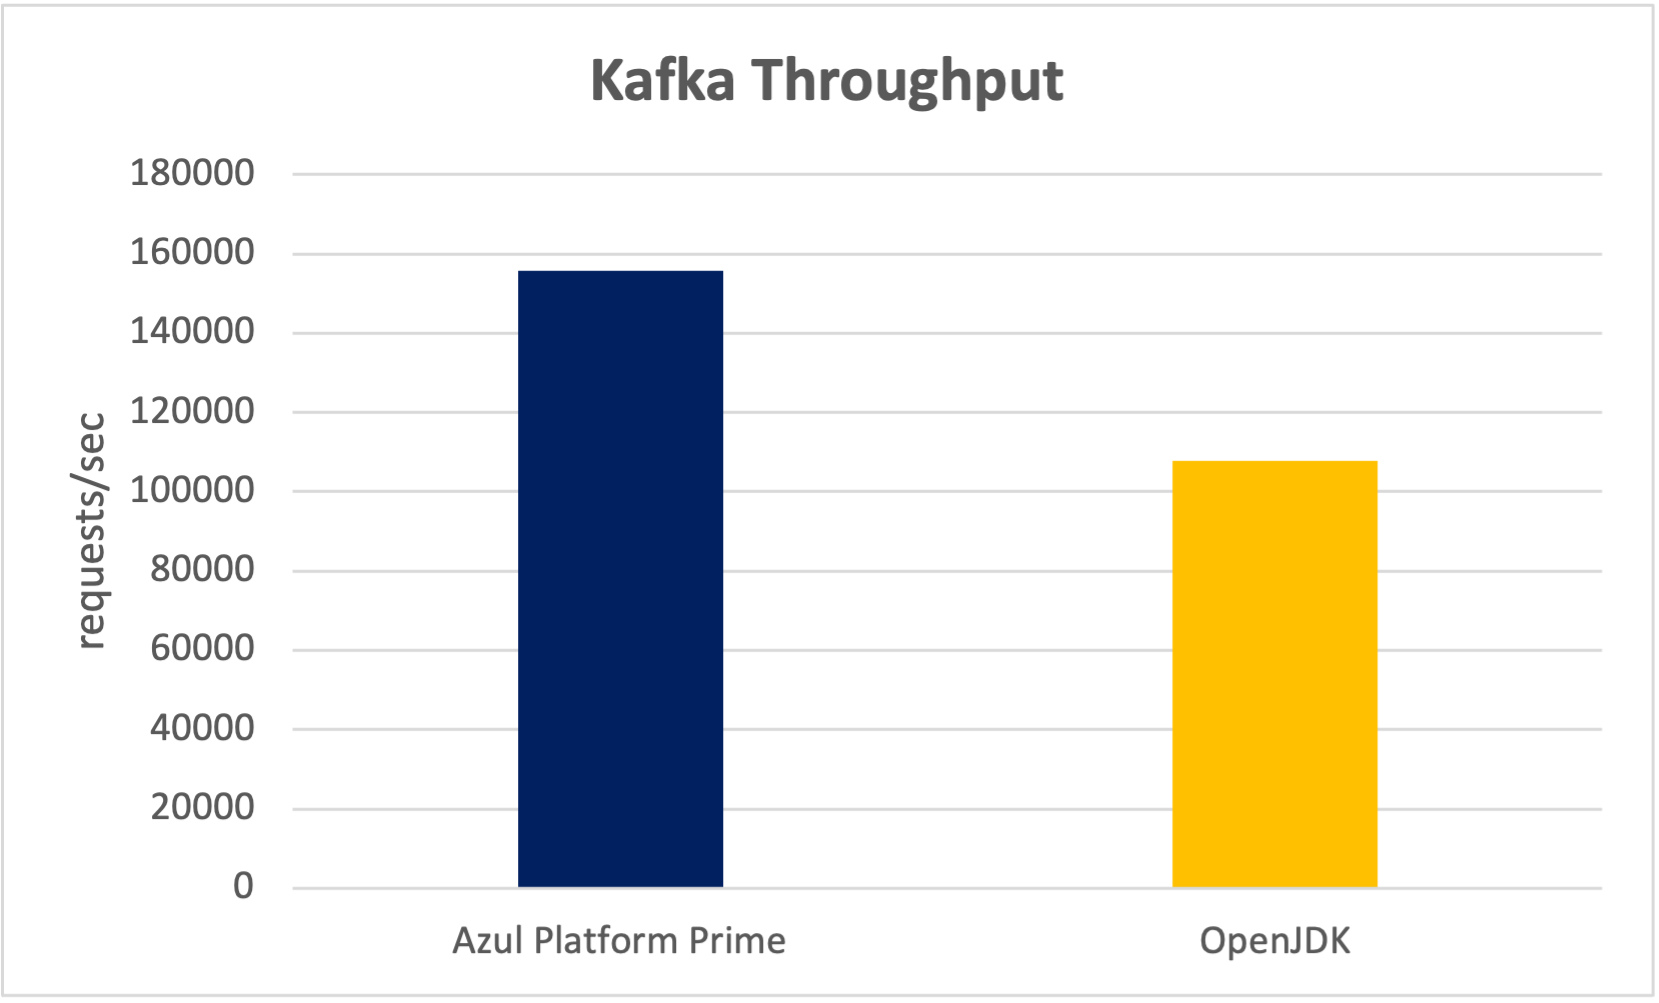 Kafka Throughput on Azul Platform Prime vs OpenJDK